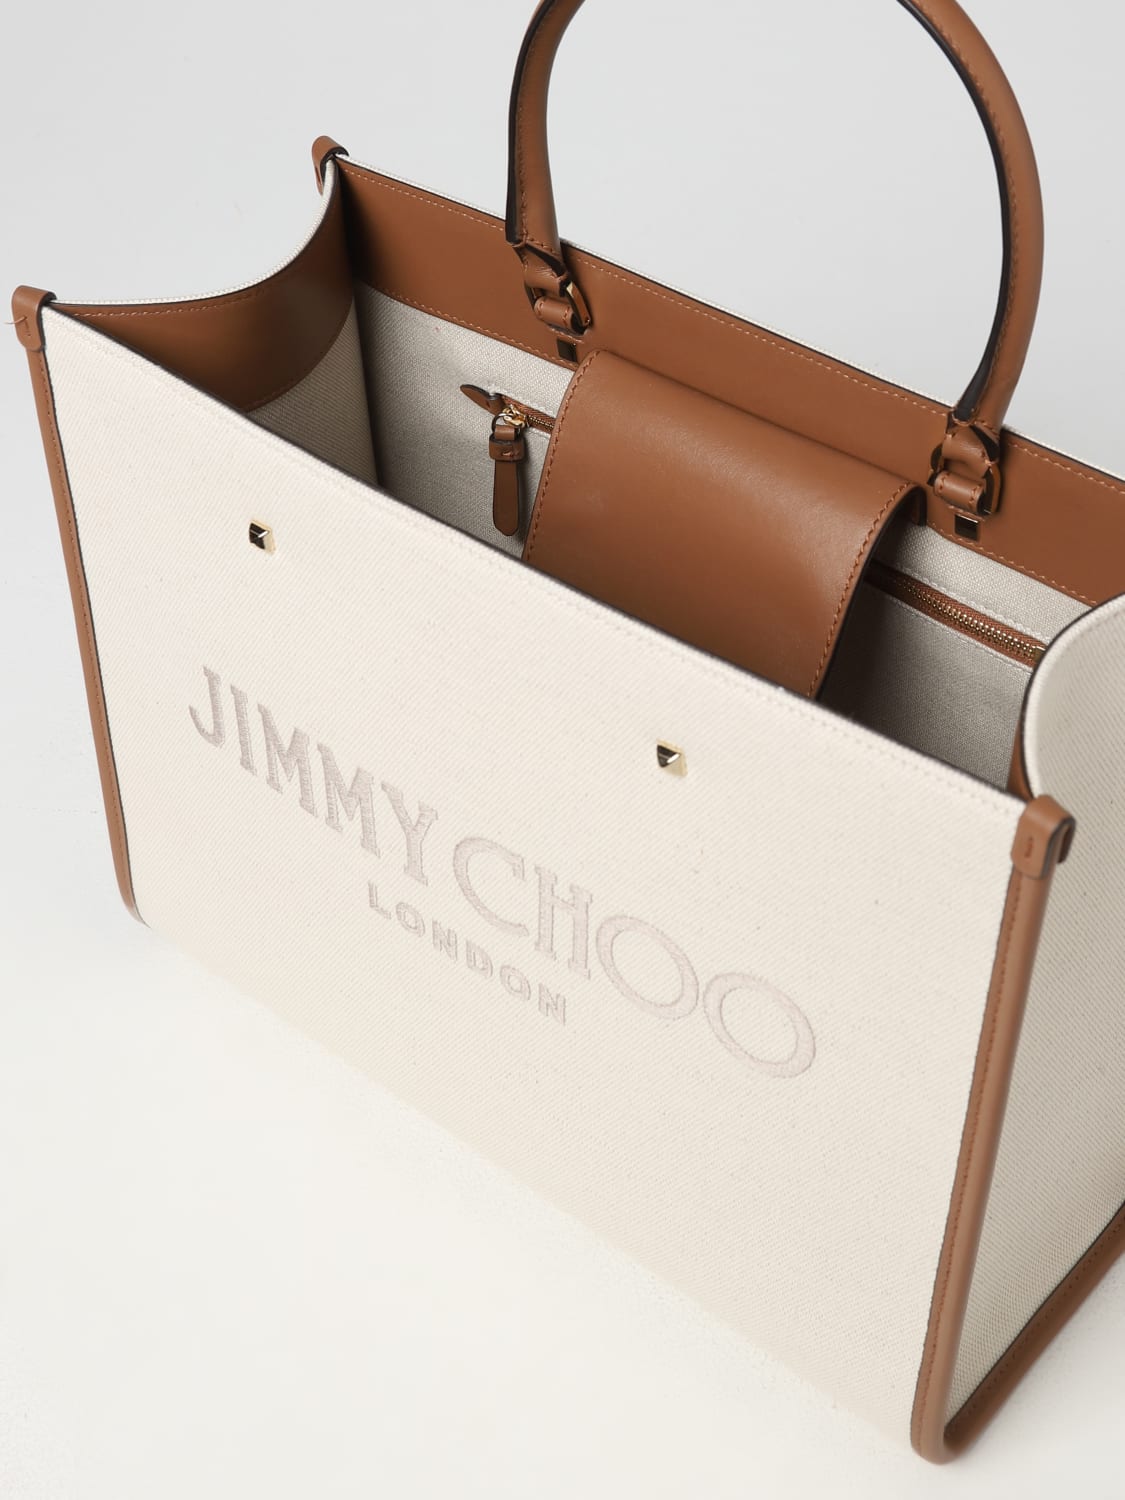 Jimmy Choo Mini Leather Avenue Shoulder Bag - Silver - One Size